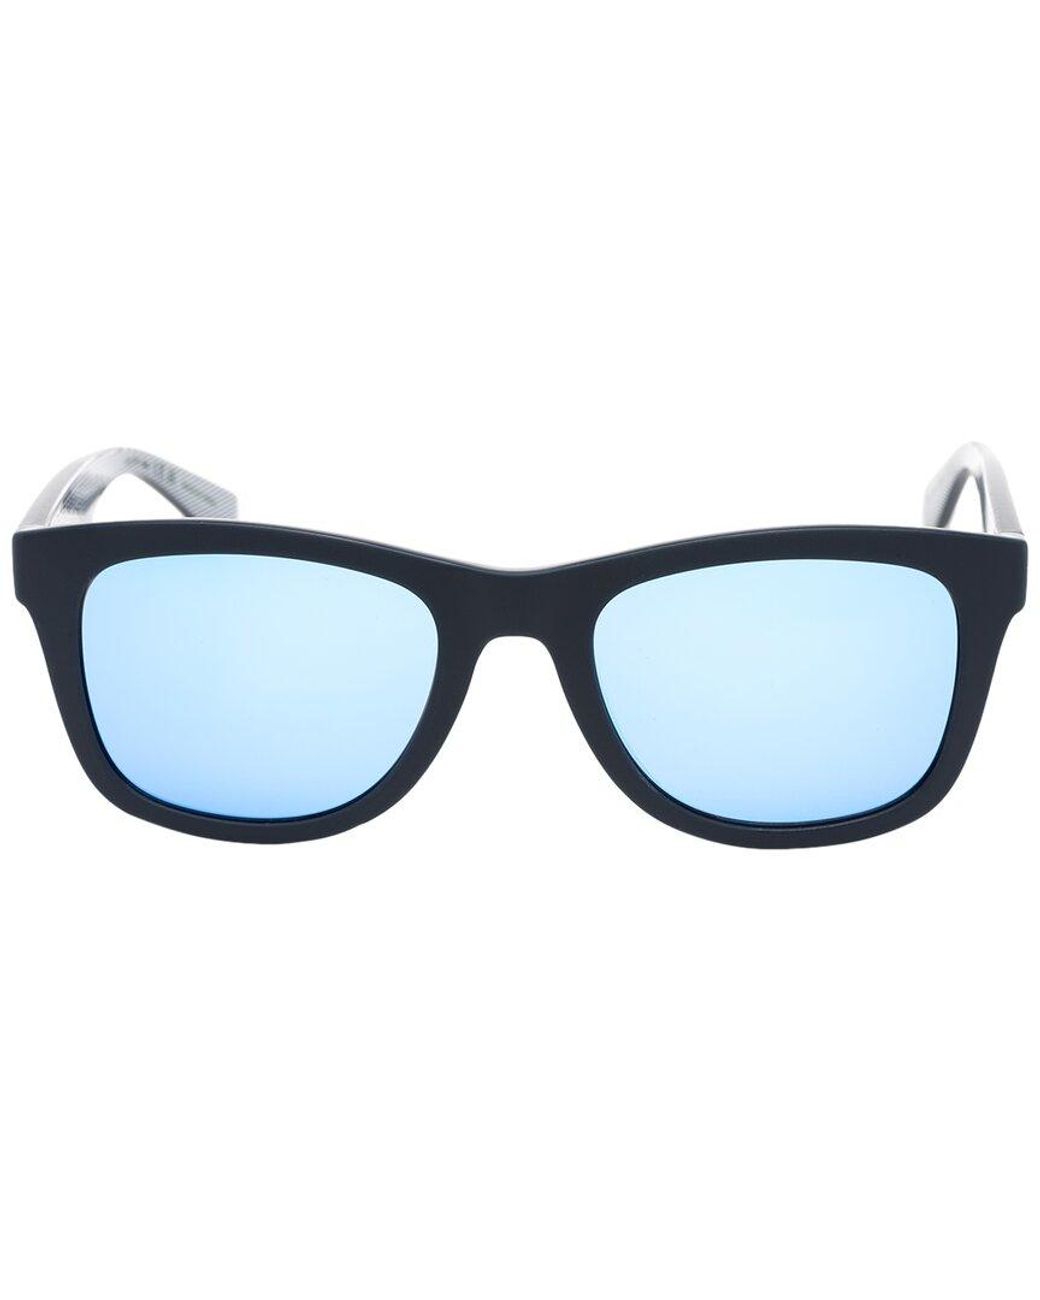 Lacoste | L242se | Dark blue | Sunglasses | DOYLE